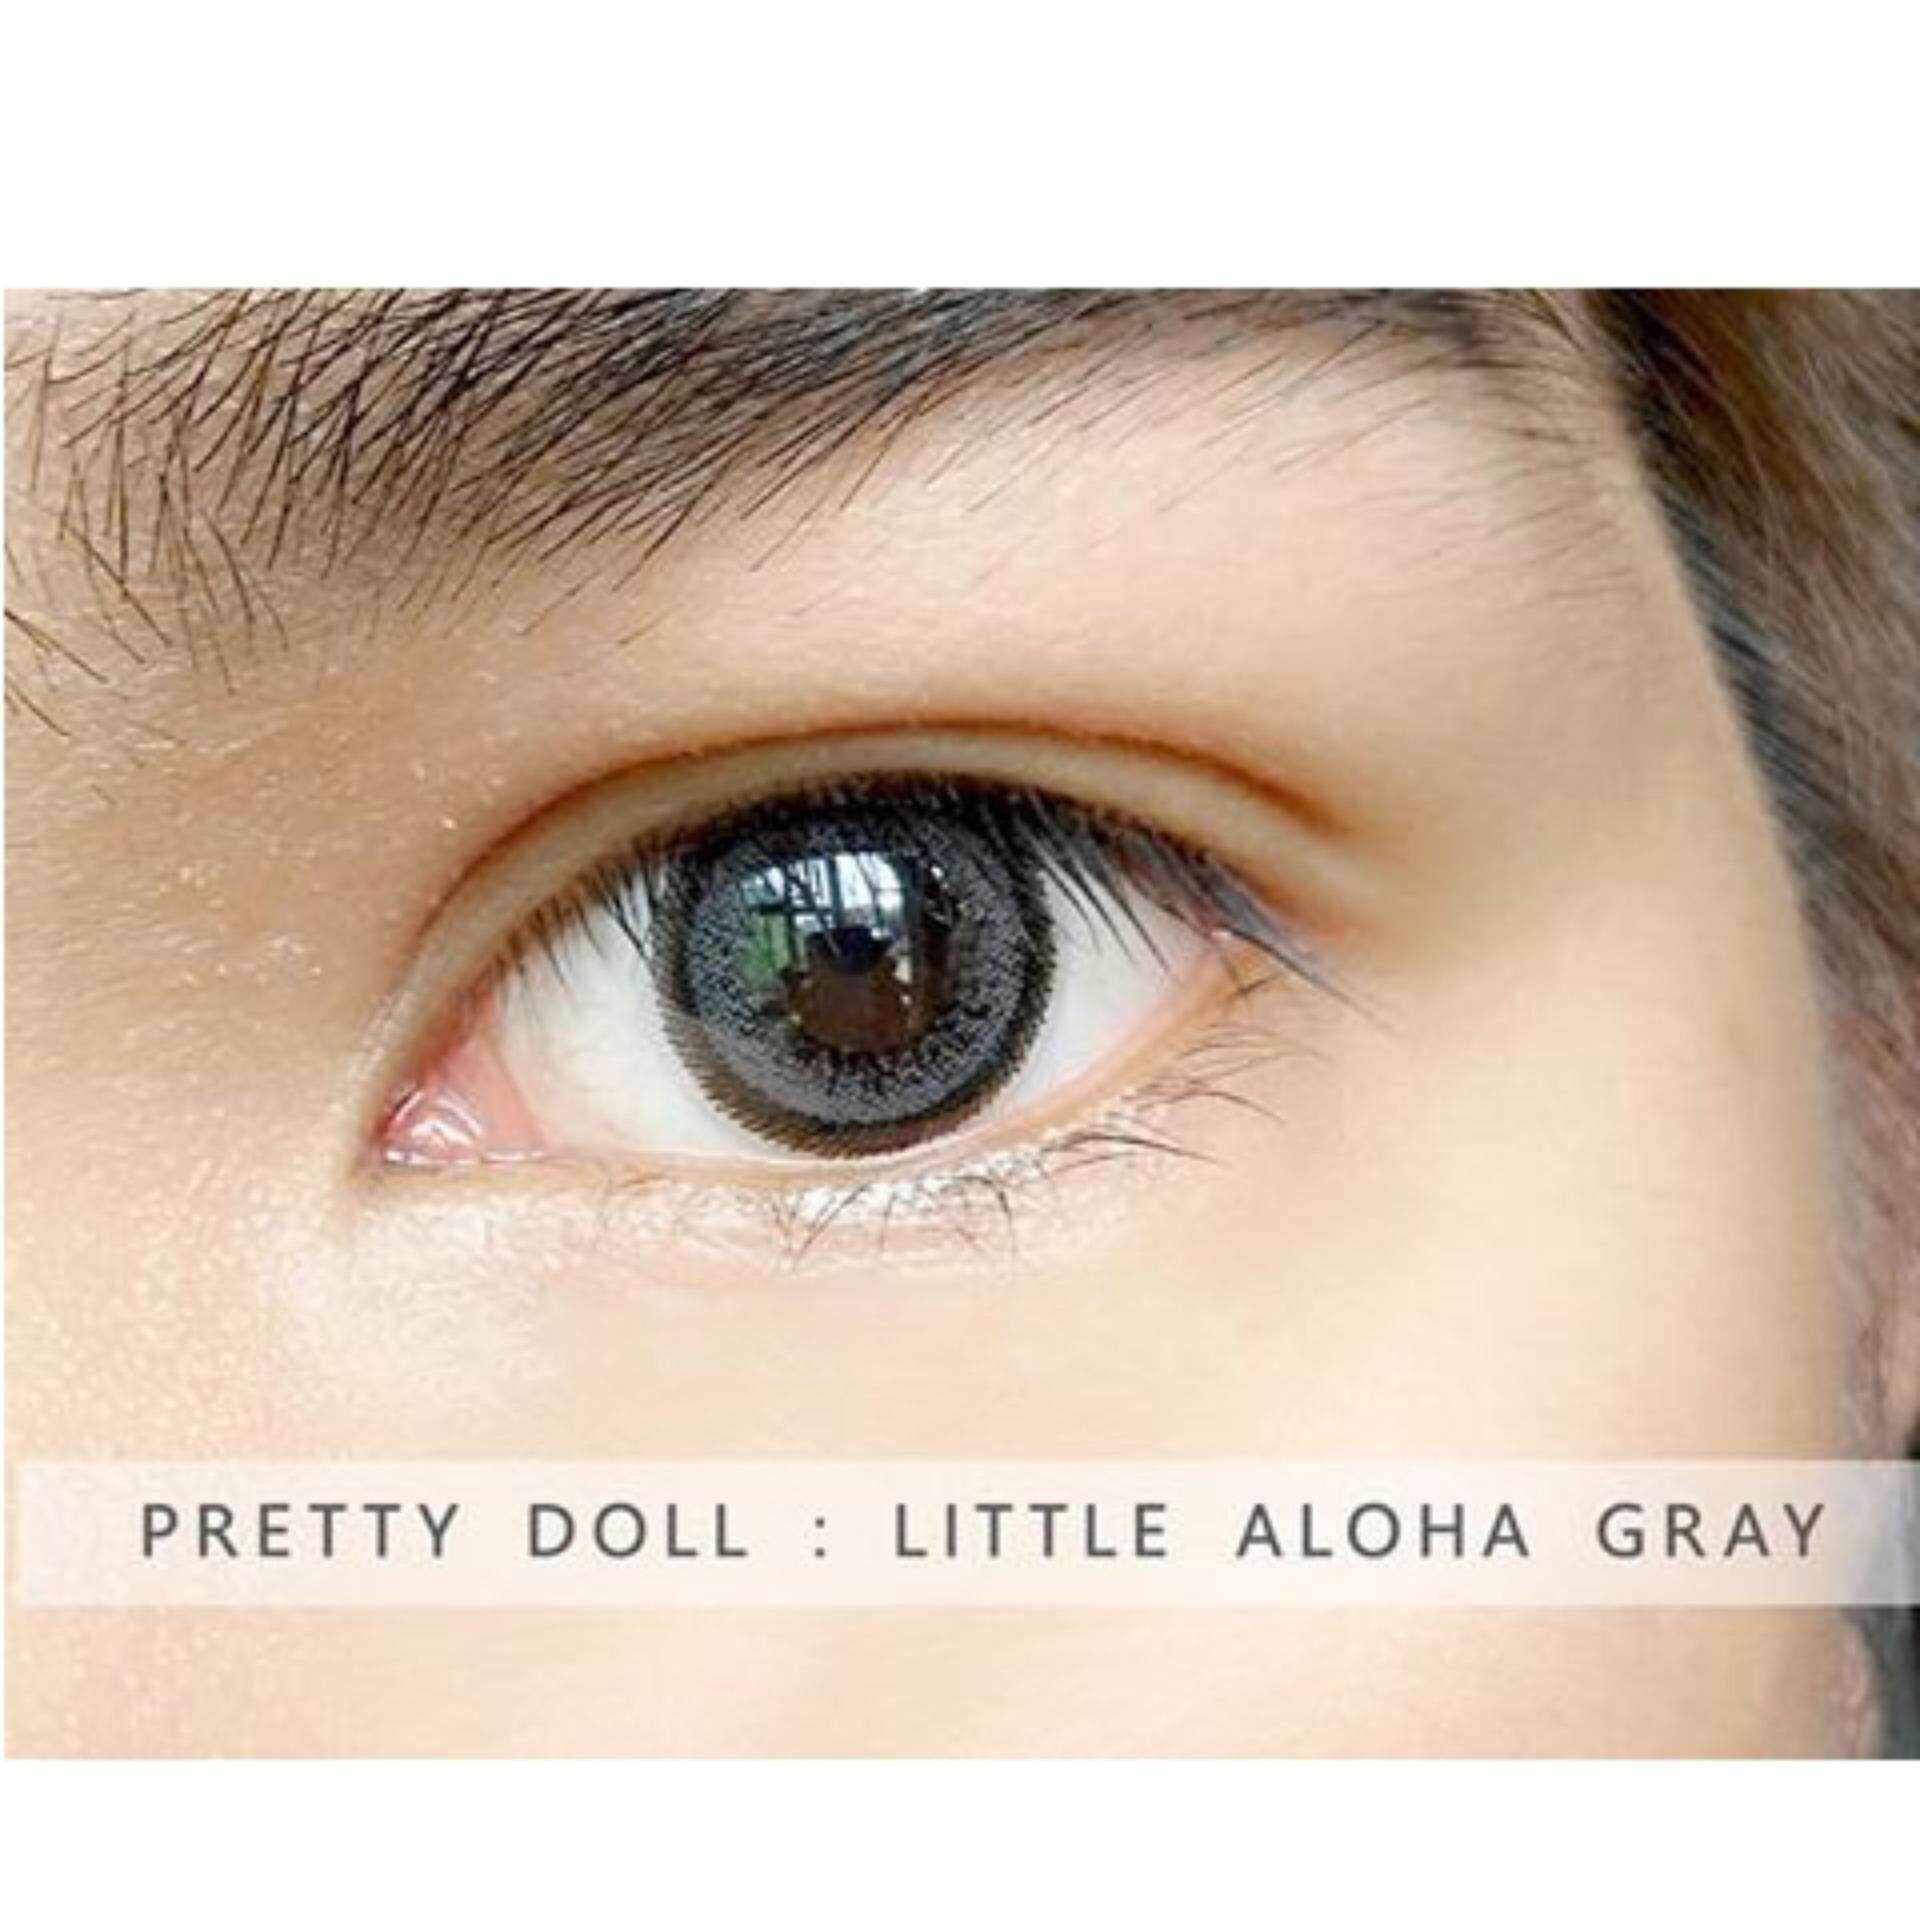 Pretty Doll Little Aloha Gray  มินิเท่าตาจริง สายตาปกติ สายตาสั้น powerlenses 300 75 350 325 250 150 100 275 4 225 375 125